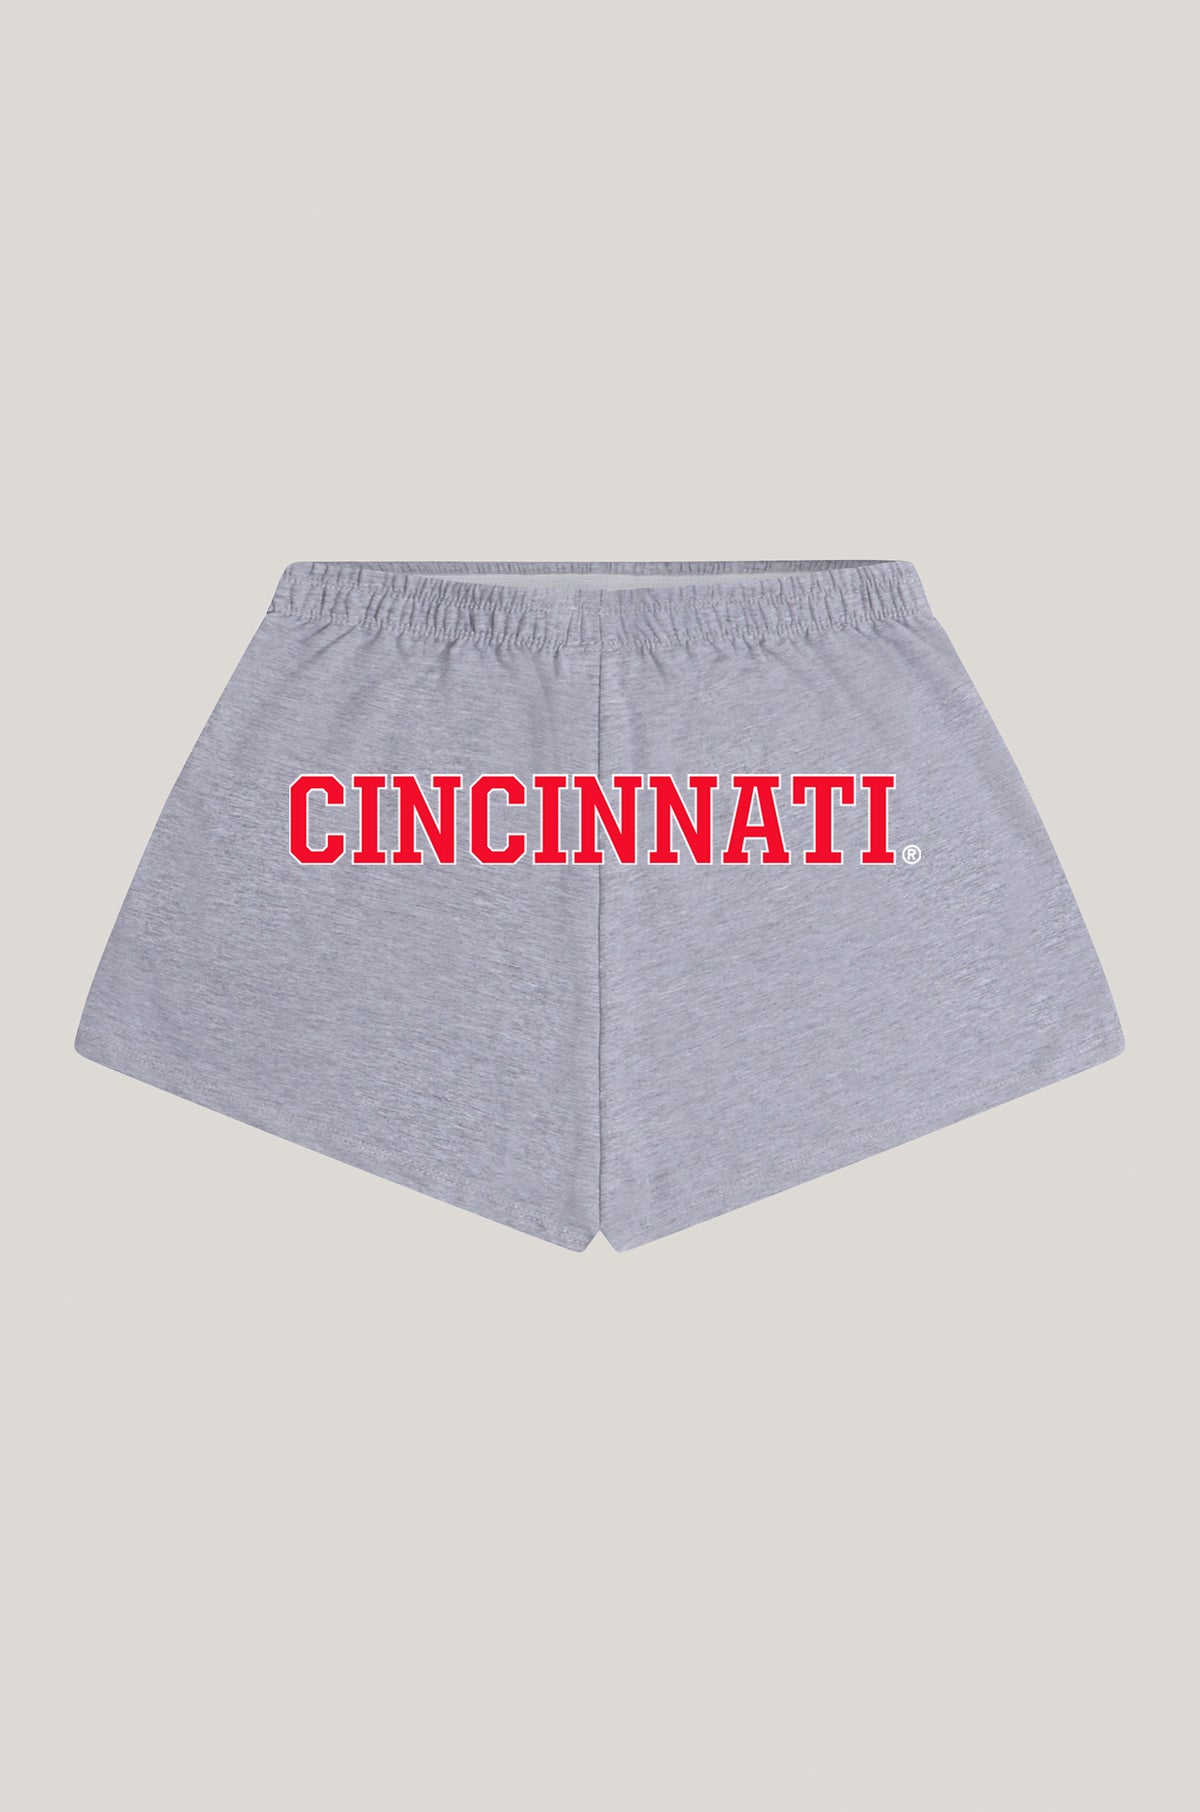 Cincinnati P.E. Shorts